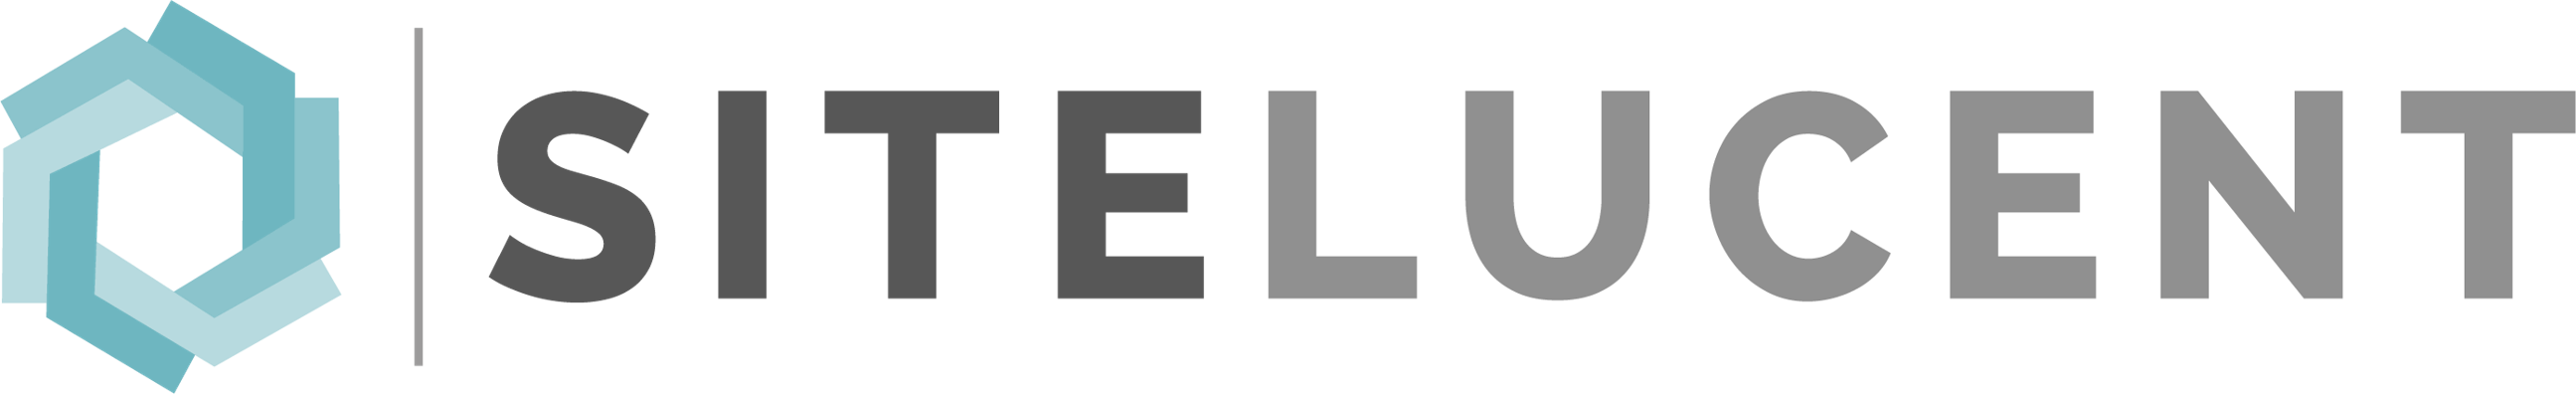 SL logo